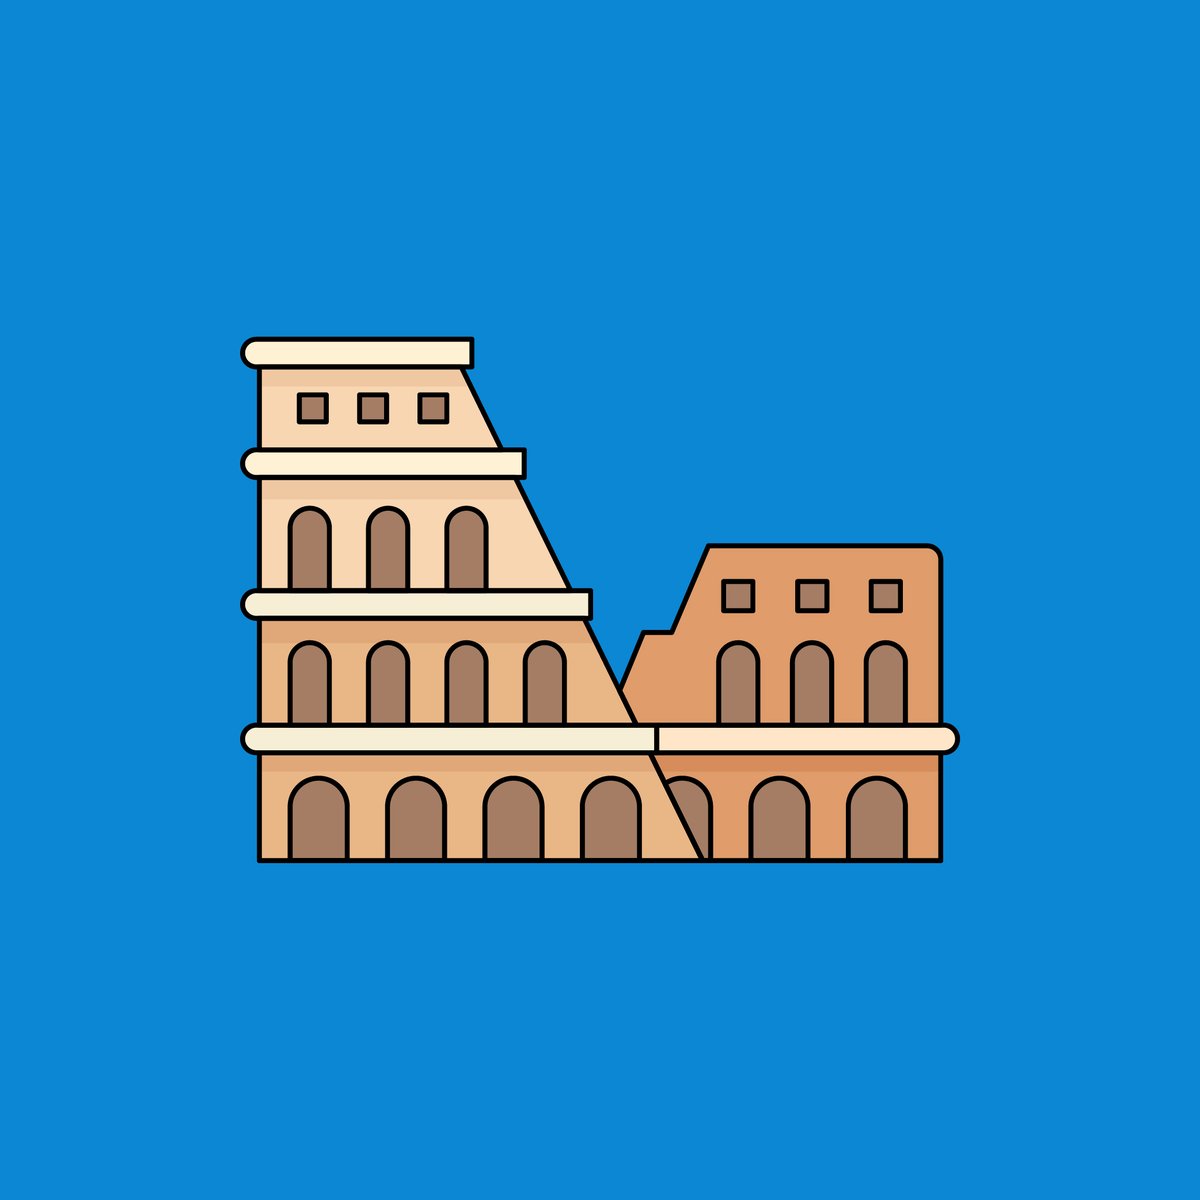 Colosseum

#Twitter #twitterx #Like #icon #viral #graphics #design #colors #illustration #vector #art #vectoricon #icondesign #building #famous #landmark #colosseum #rome #italy 

shutterstock.com/g/Rimsha+Ibrar